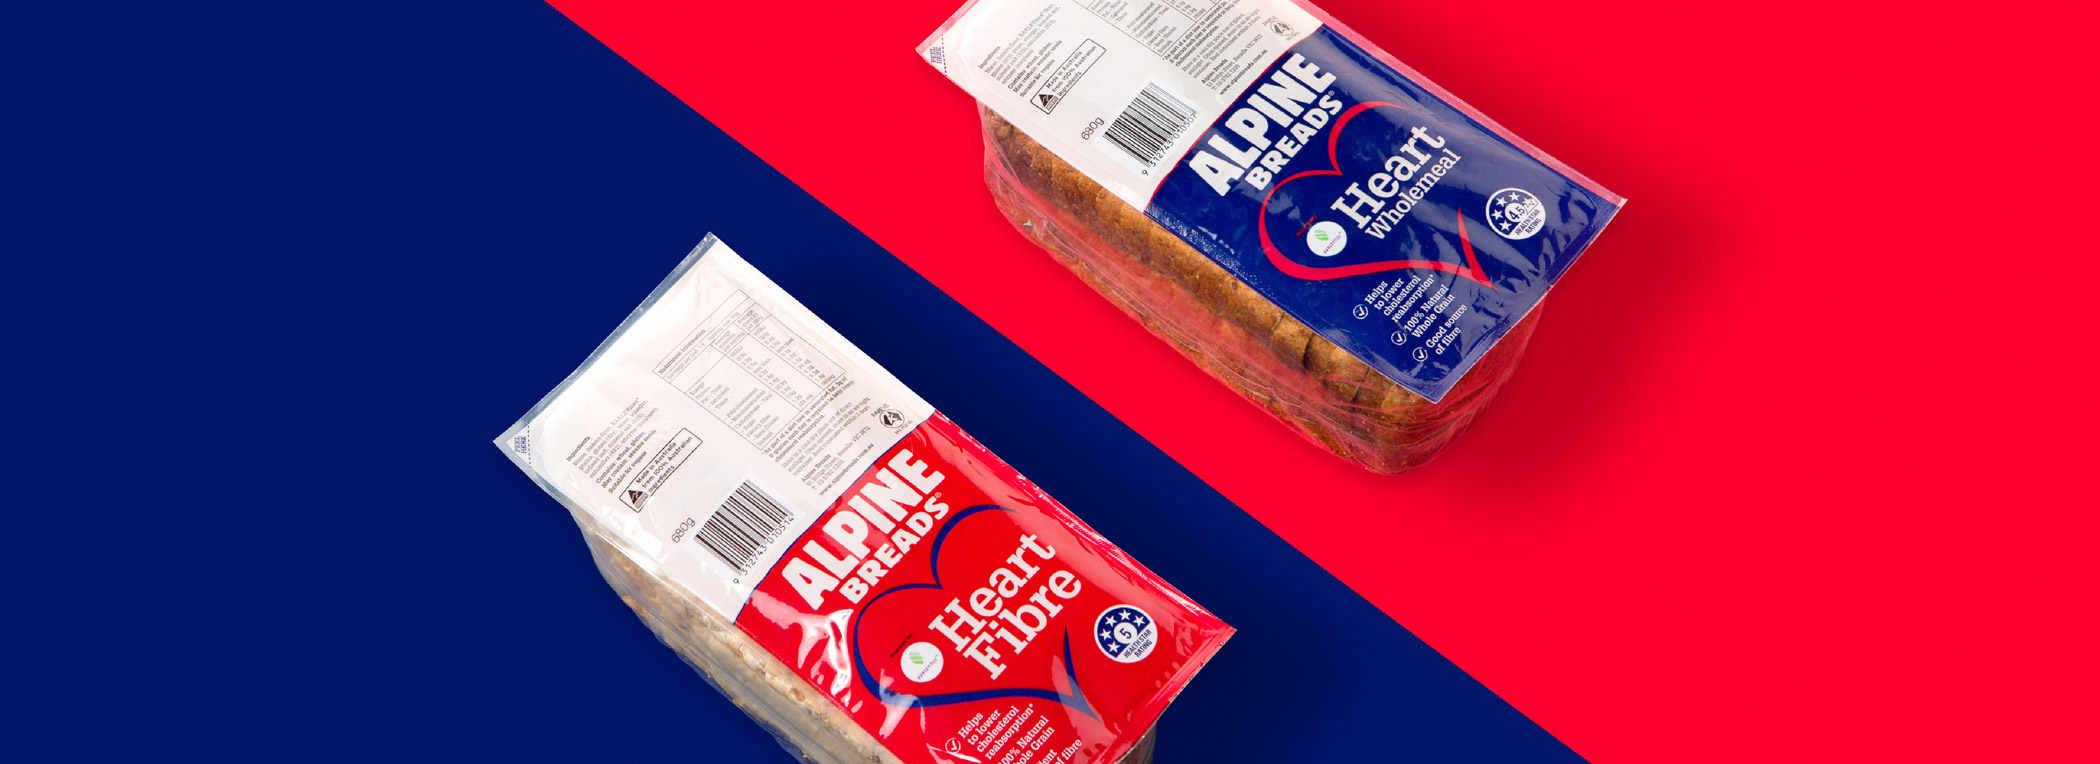 Alpine Bread Packaging Design